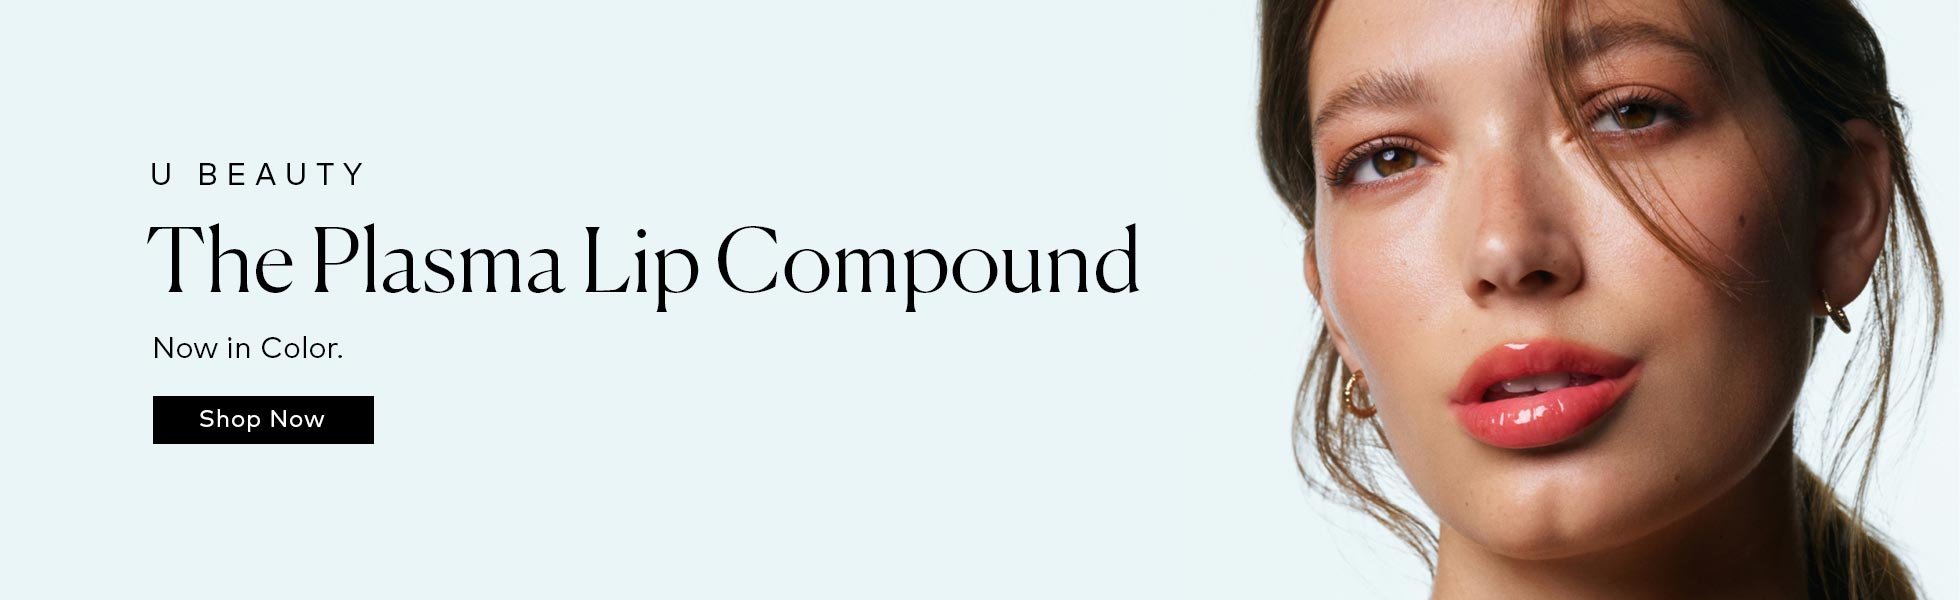 Shop the new shades of the U Beauty Plasma Lip Compound